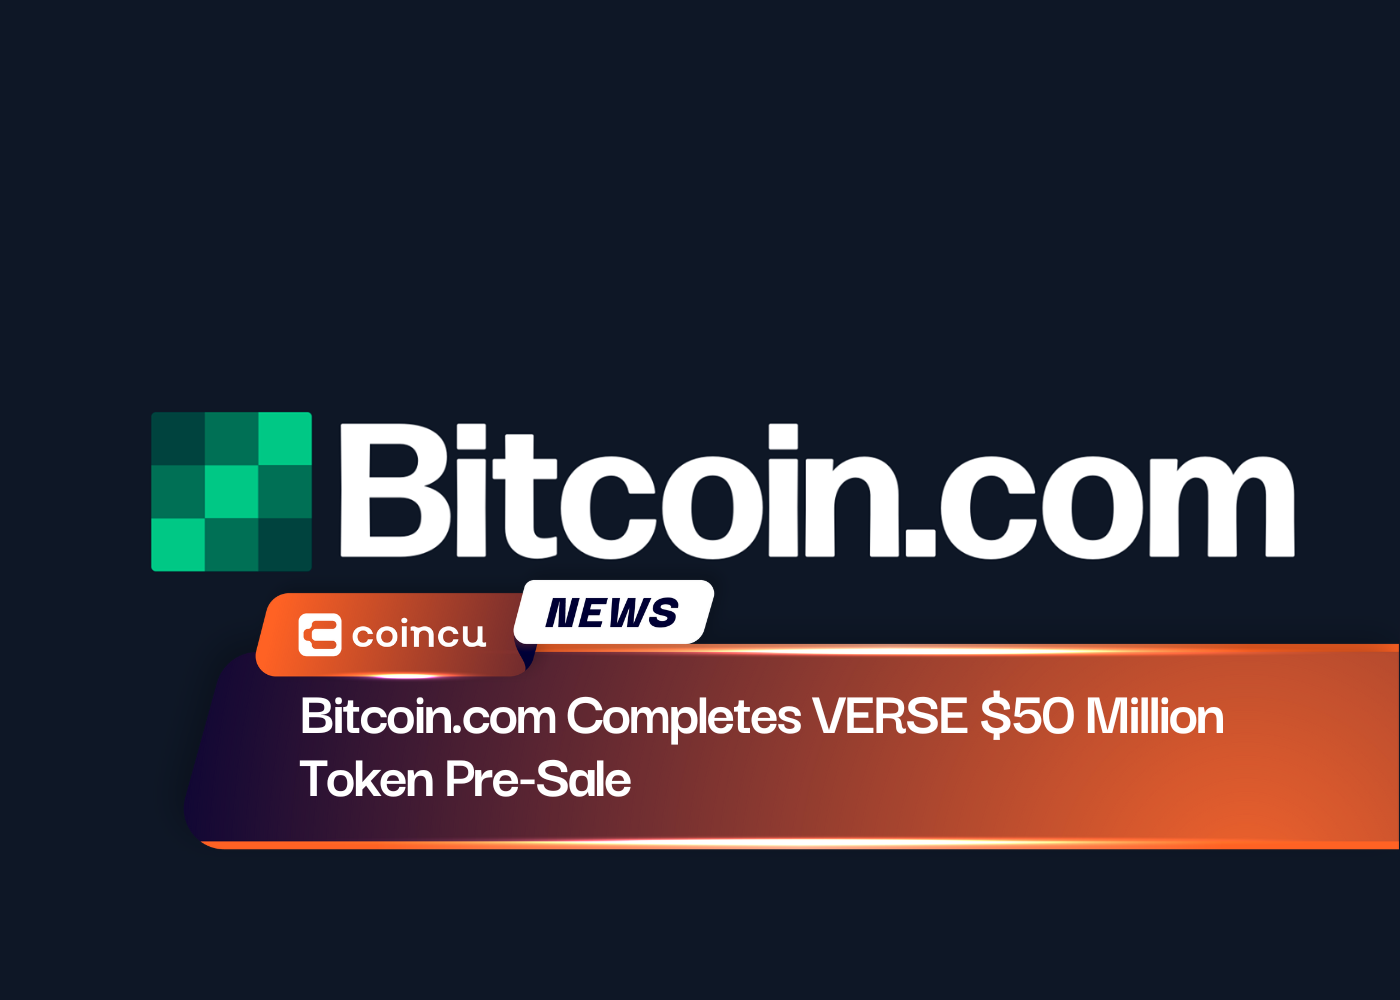 Bitcoin.com Completes VERSE $50 Million Token Pre-Sale